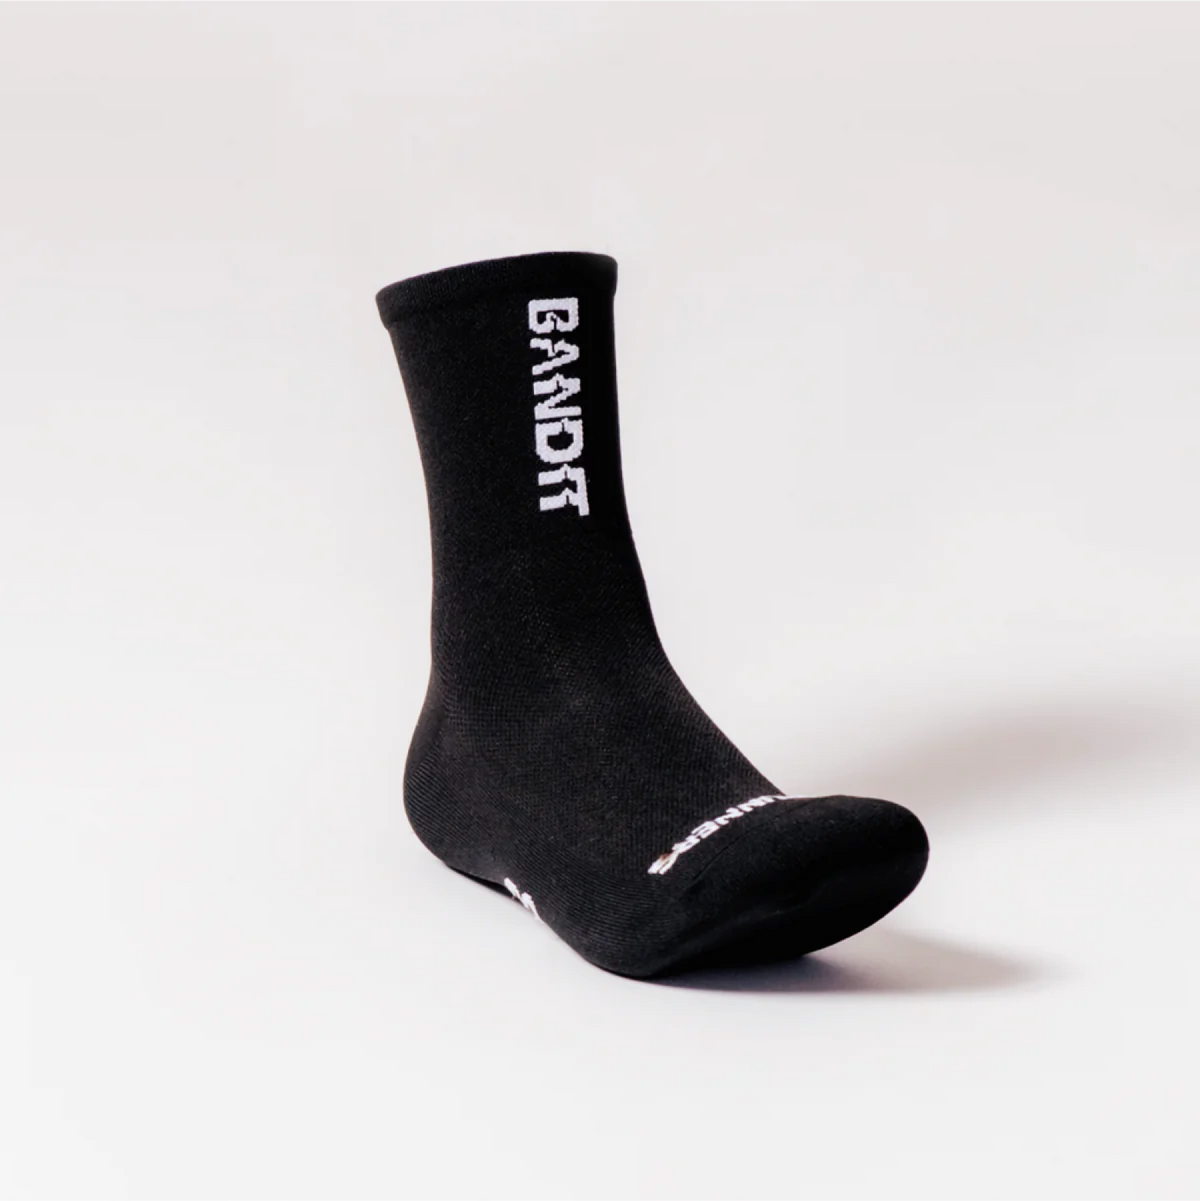 Lite Run™ Quarter Socks Bundle - Heather Grey & Storm Grey with White - 4  Pack